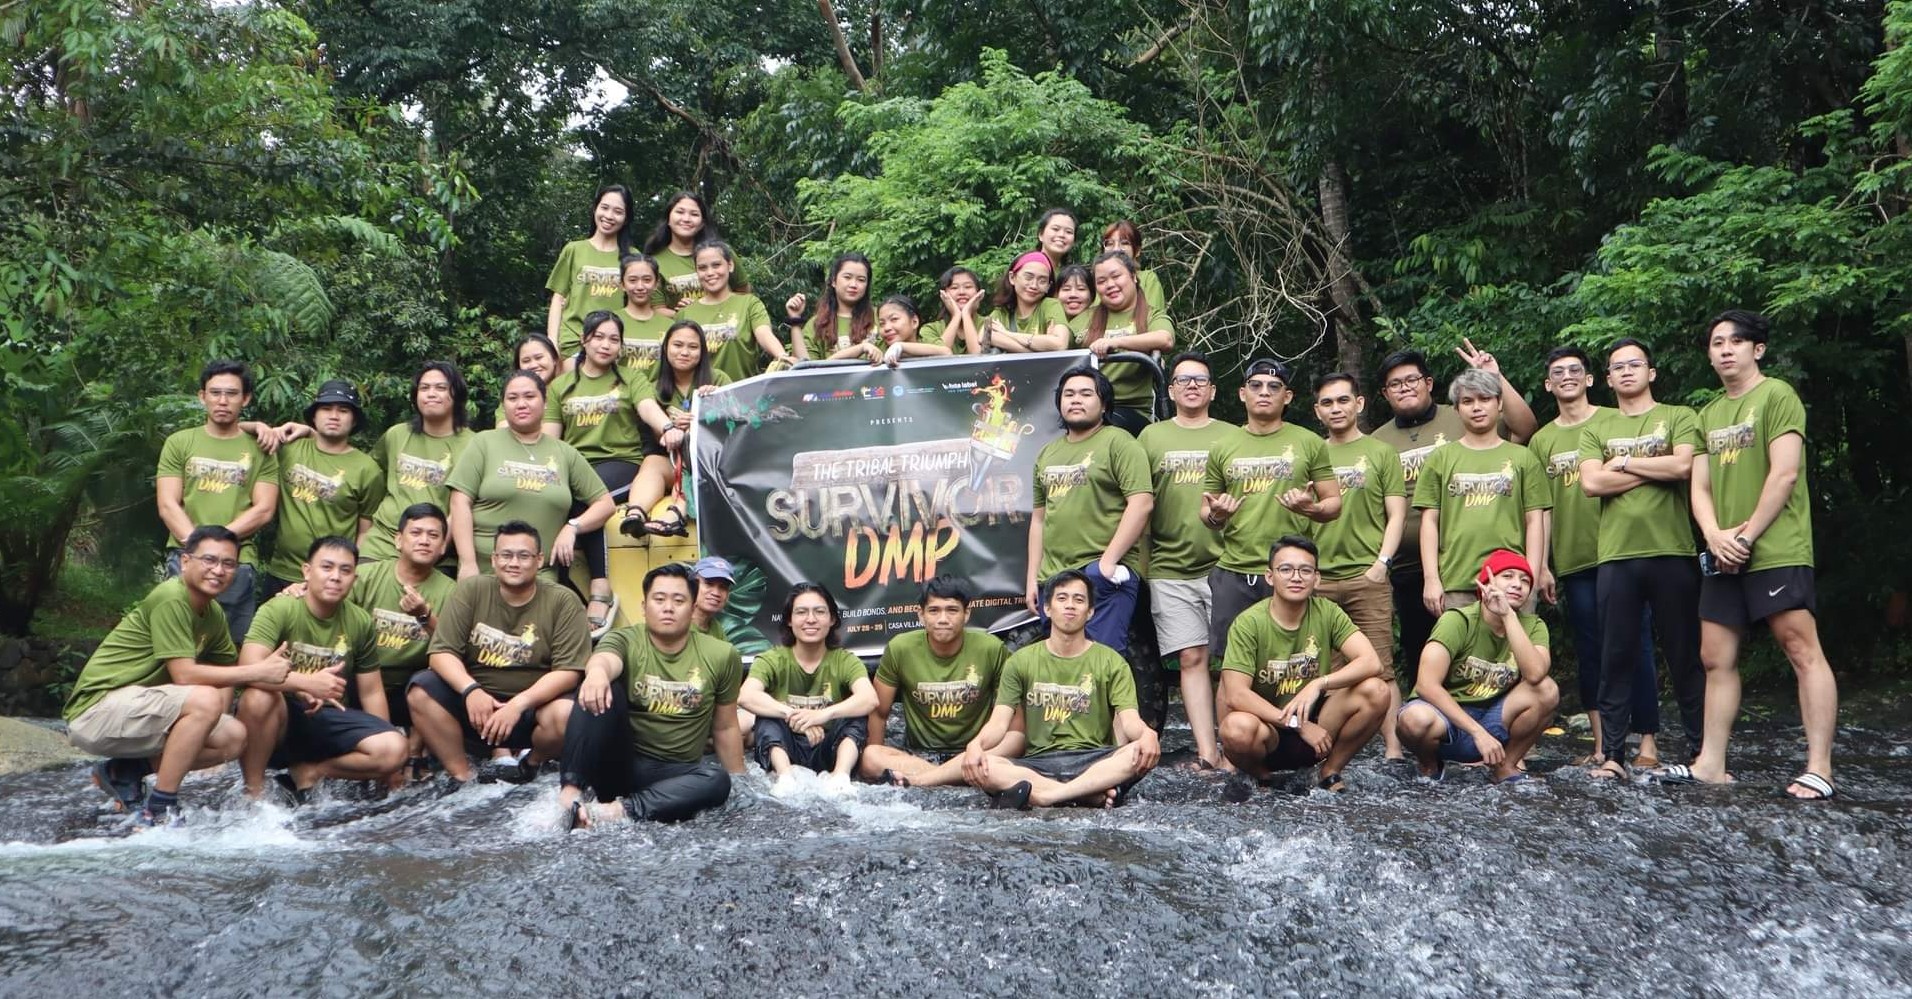 CJG | DMP Team Building Survivor DMP And 10th Anniversary